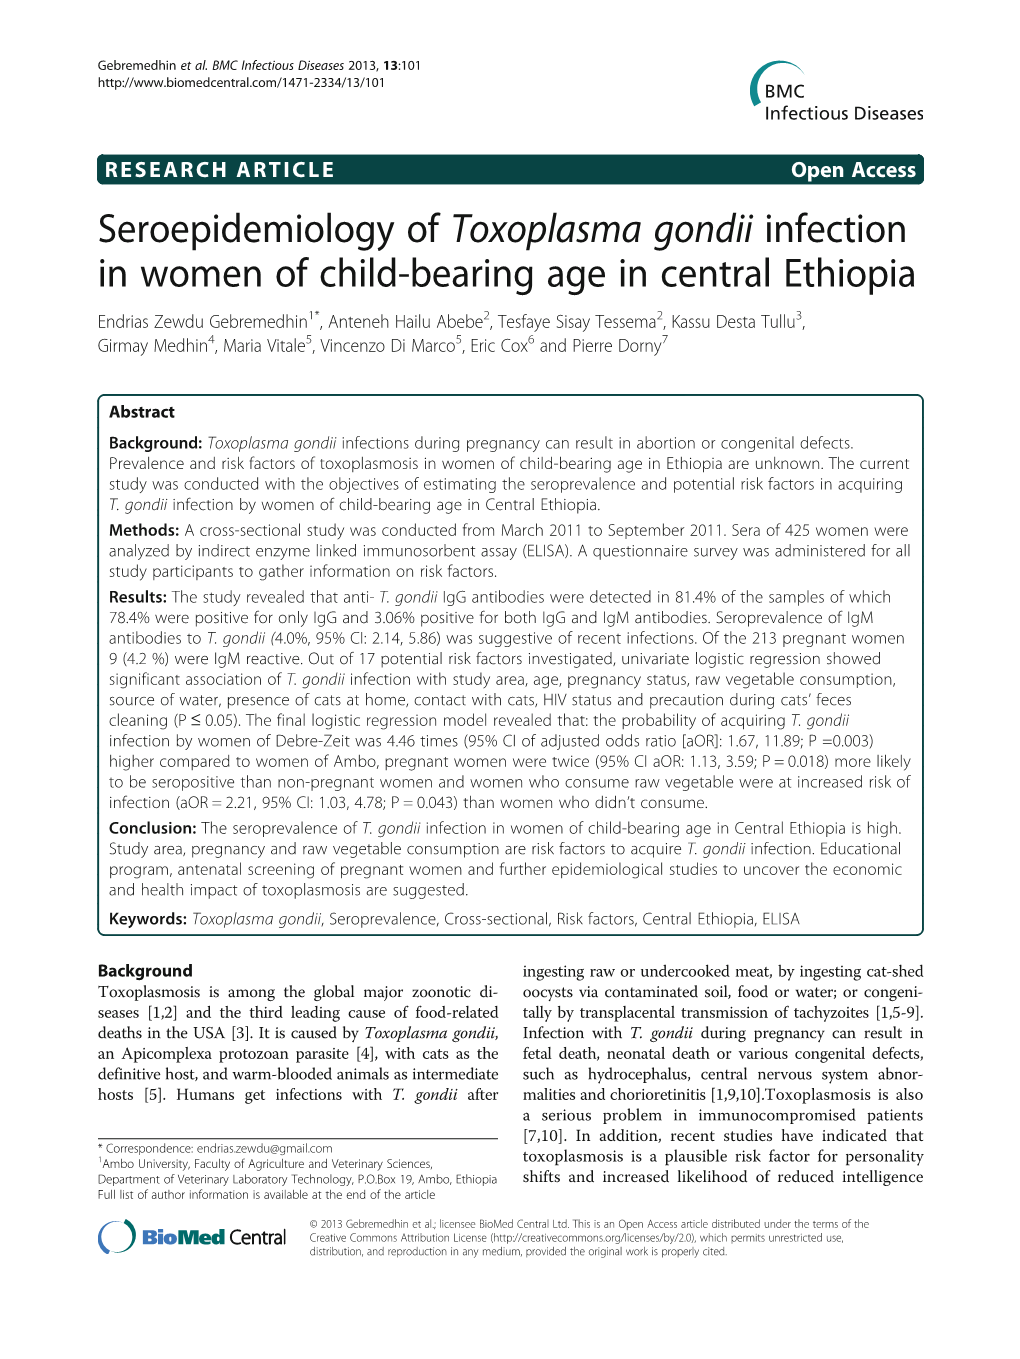 Seroepidemiology of Toxoplasma Gondii Infection in Women of Child